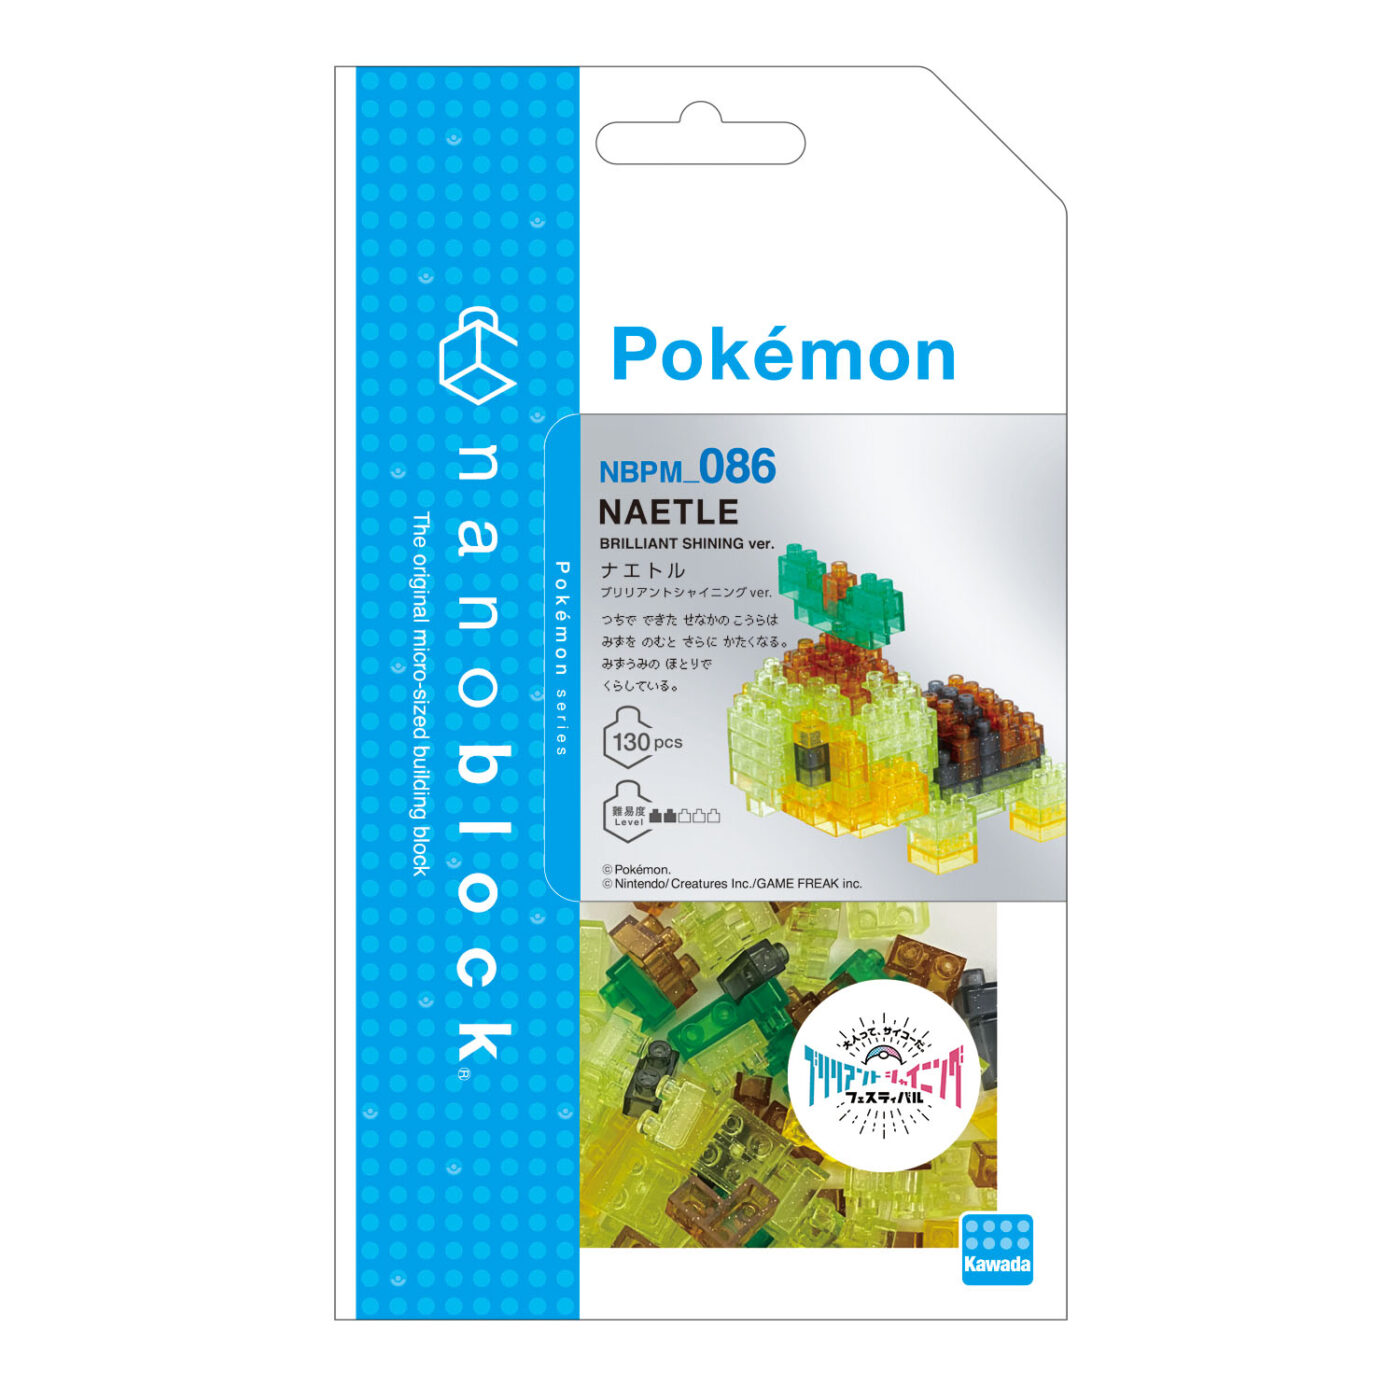 Product image of Pokémon NAETLE BRILLIANT SHINING ver.3